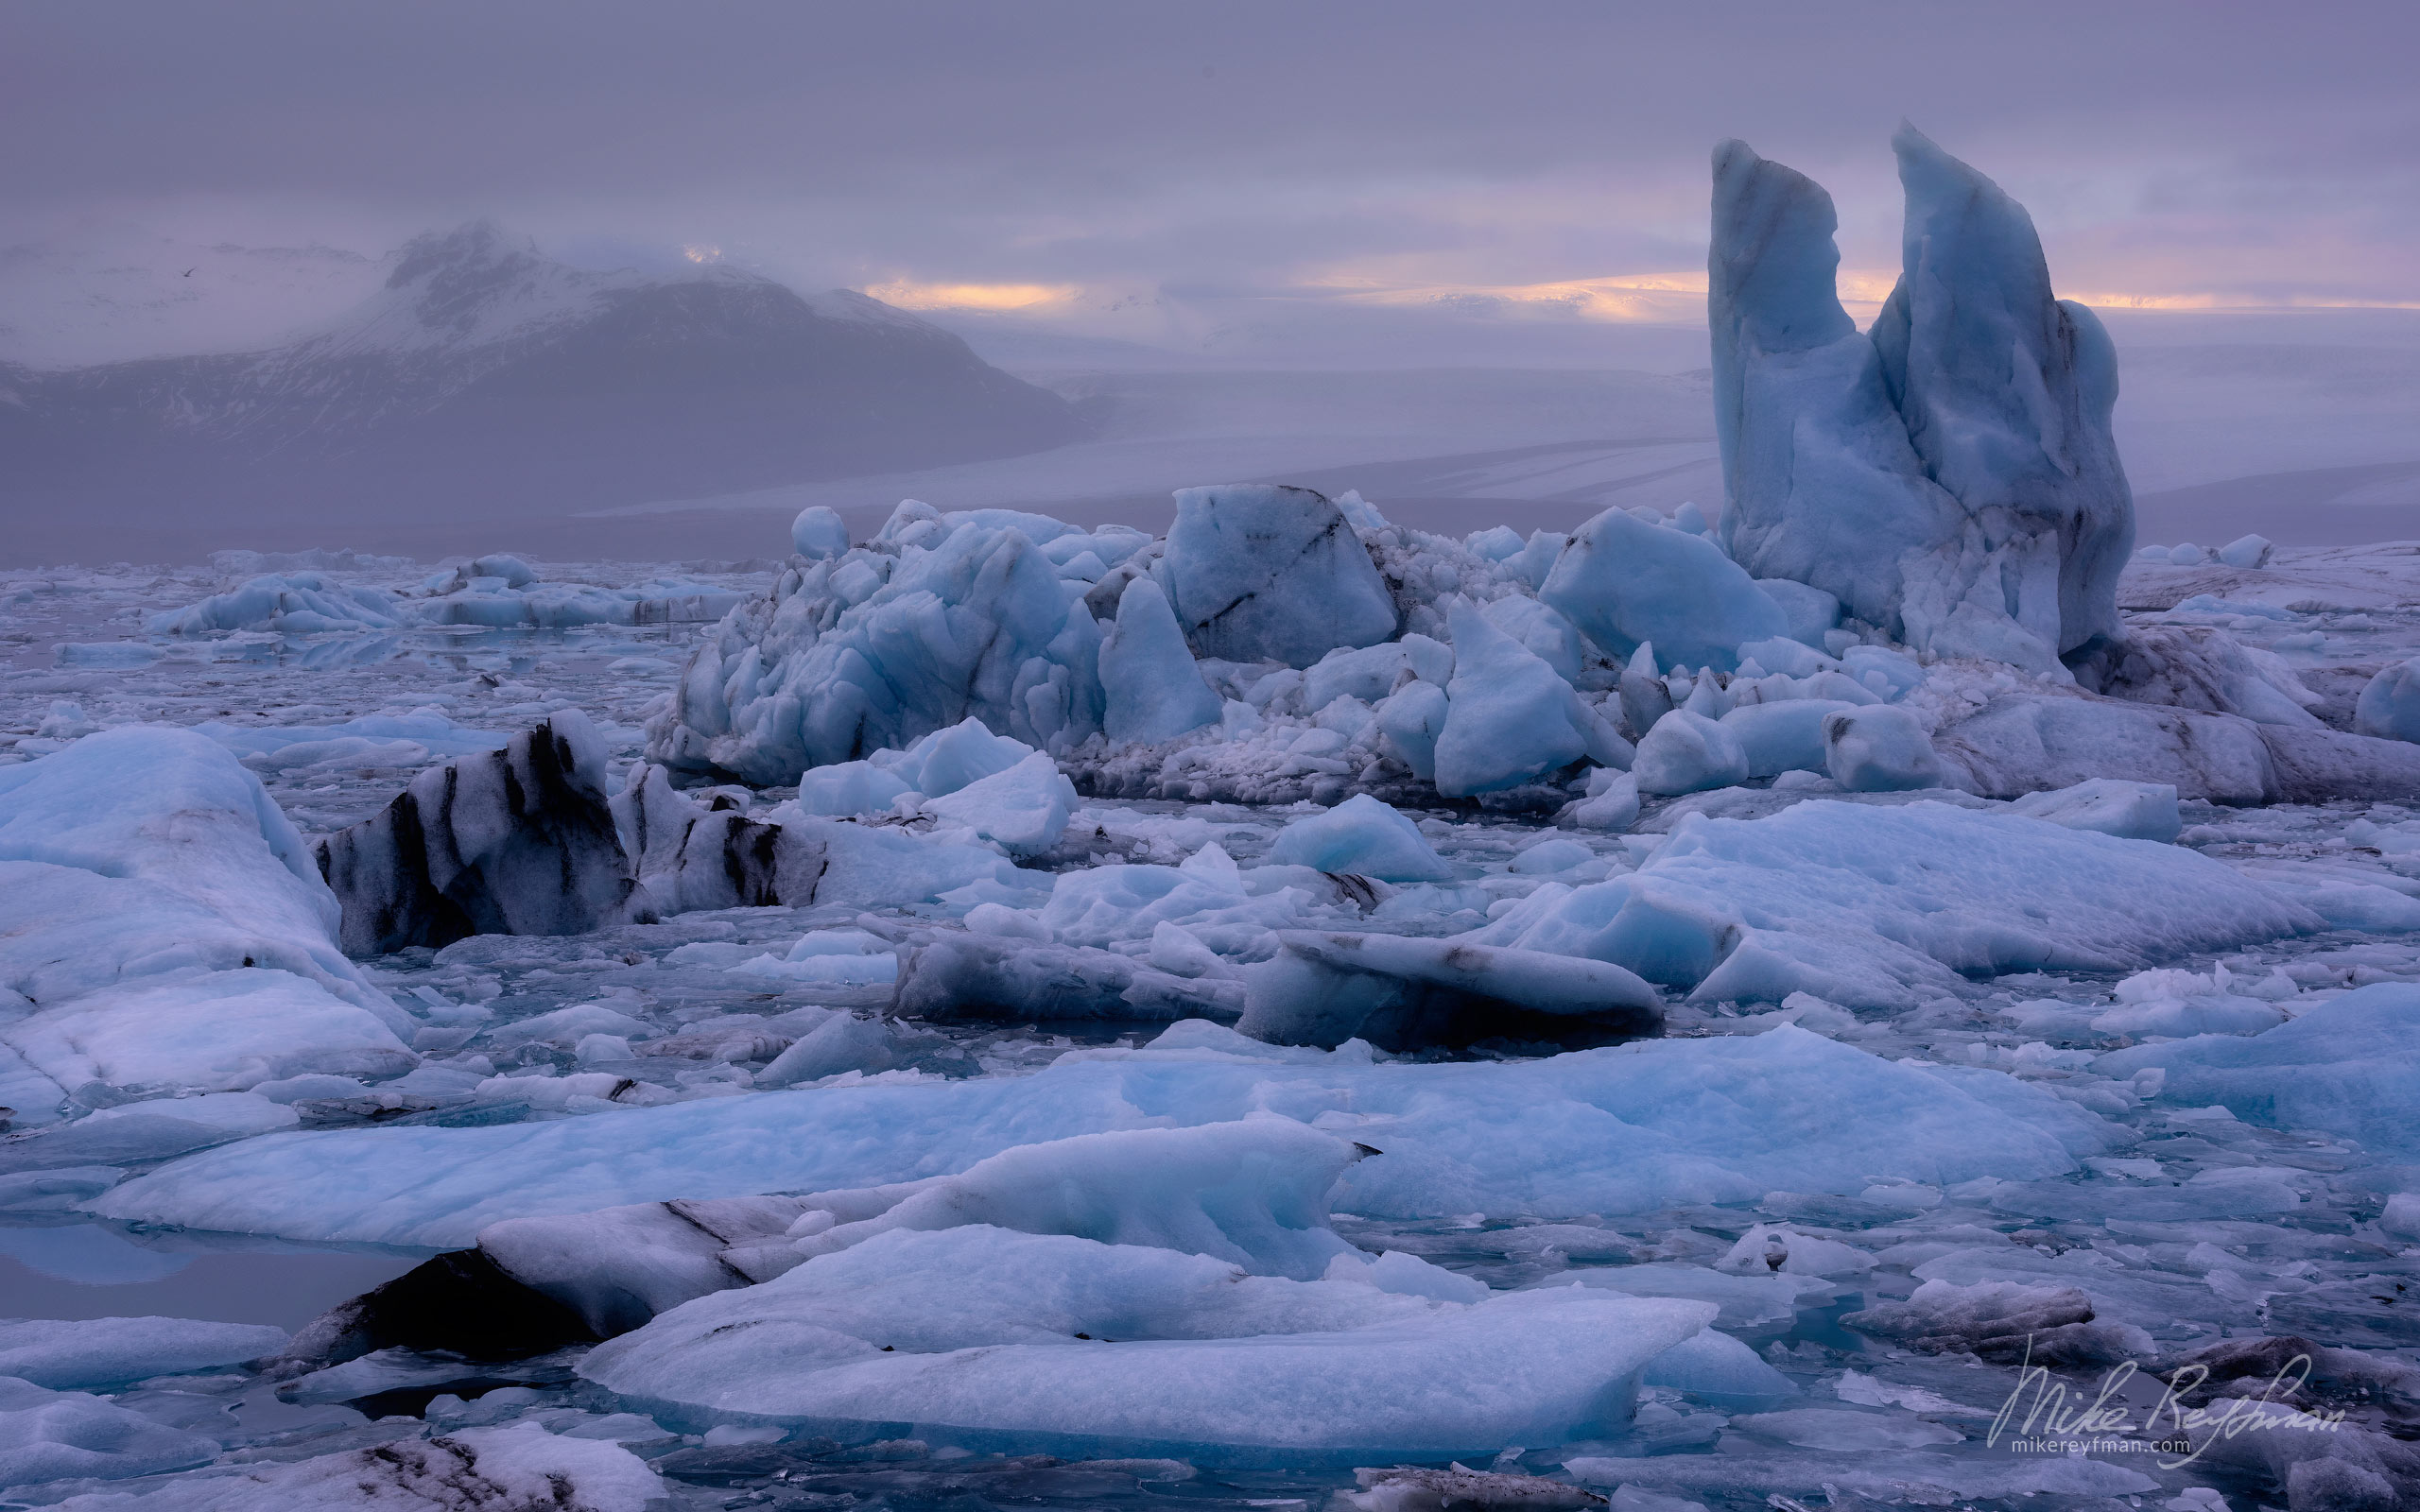 Icebergs in the Jokulsarlon (Jökulsárlón) glacial lagoon. Breiðamerkurjökull glacier, Vatnajökull National Park, Iceland, South coast IC-ICE 040 _10P3476 - Where Lava Meets the Ocean. Iceland coastline. - Mike Reyfman Photography